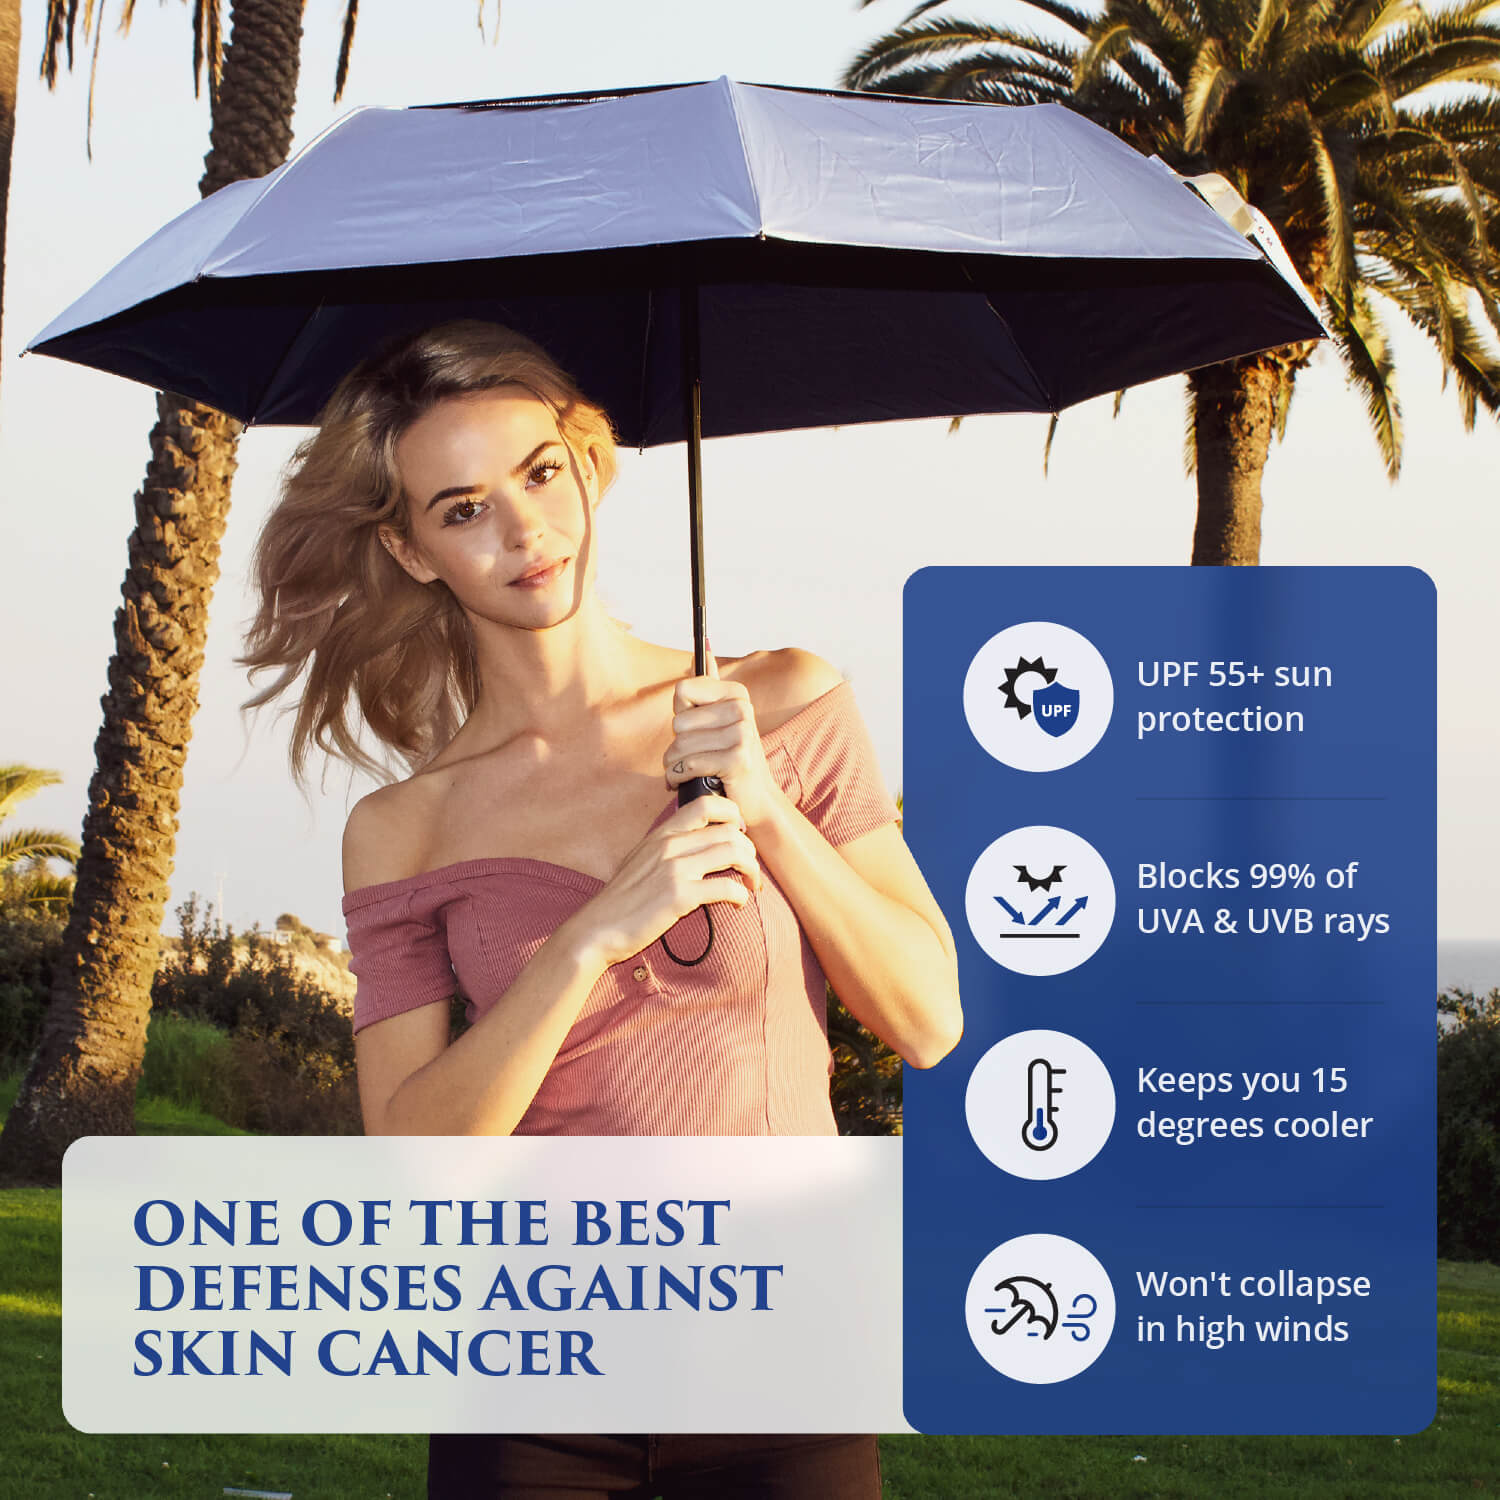 UV-Blocker Compact Sun Umbrella is the Best Defense Against Skin Cancer